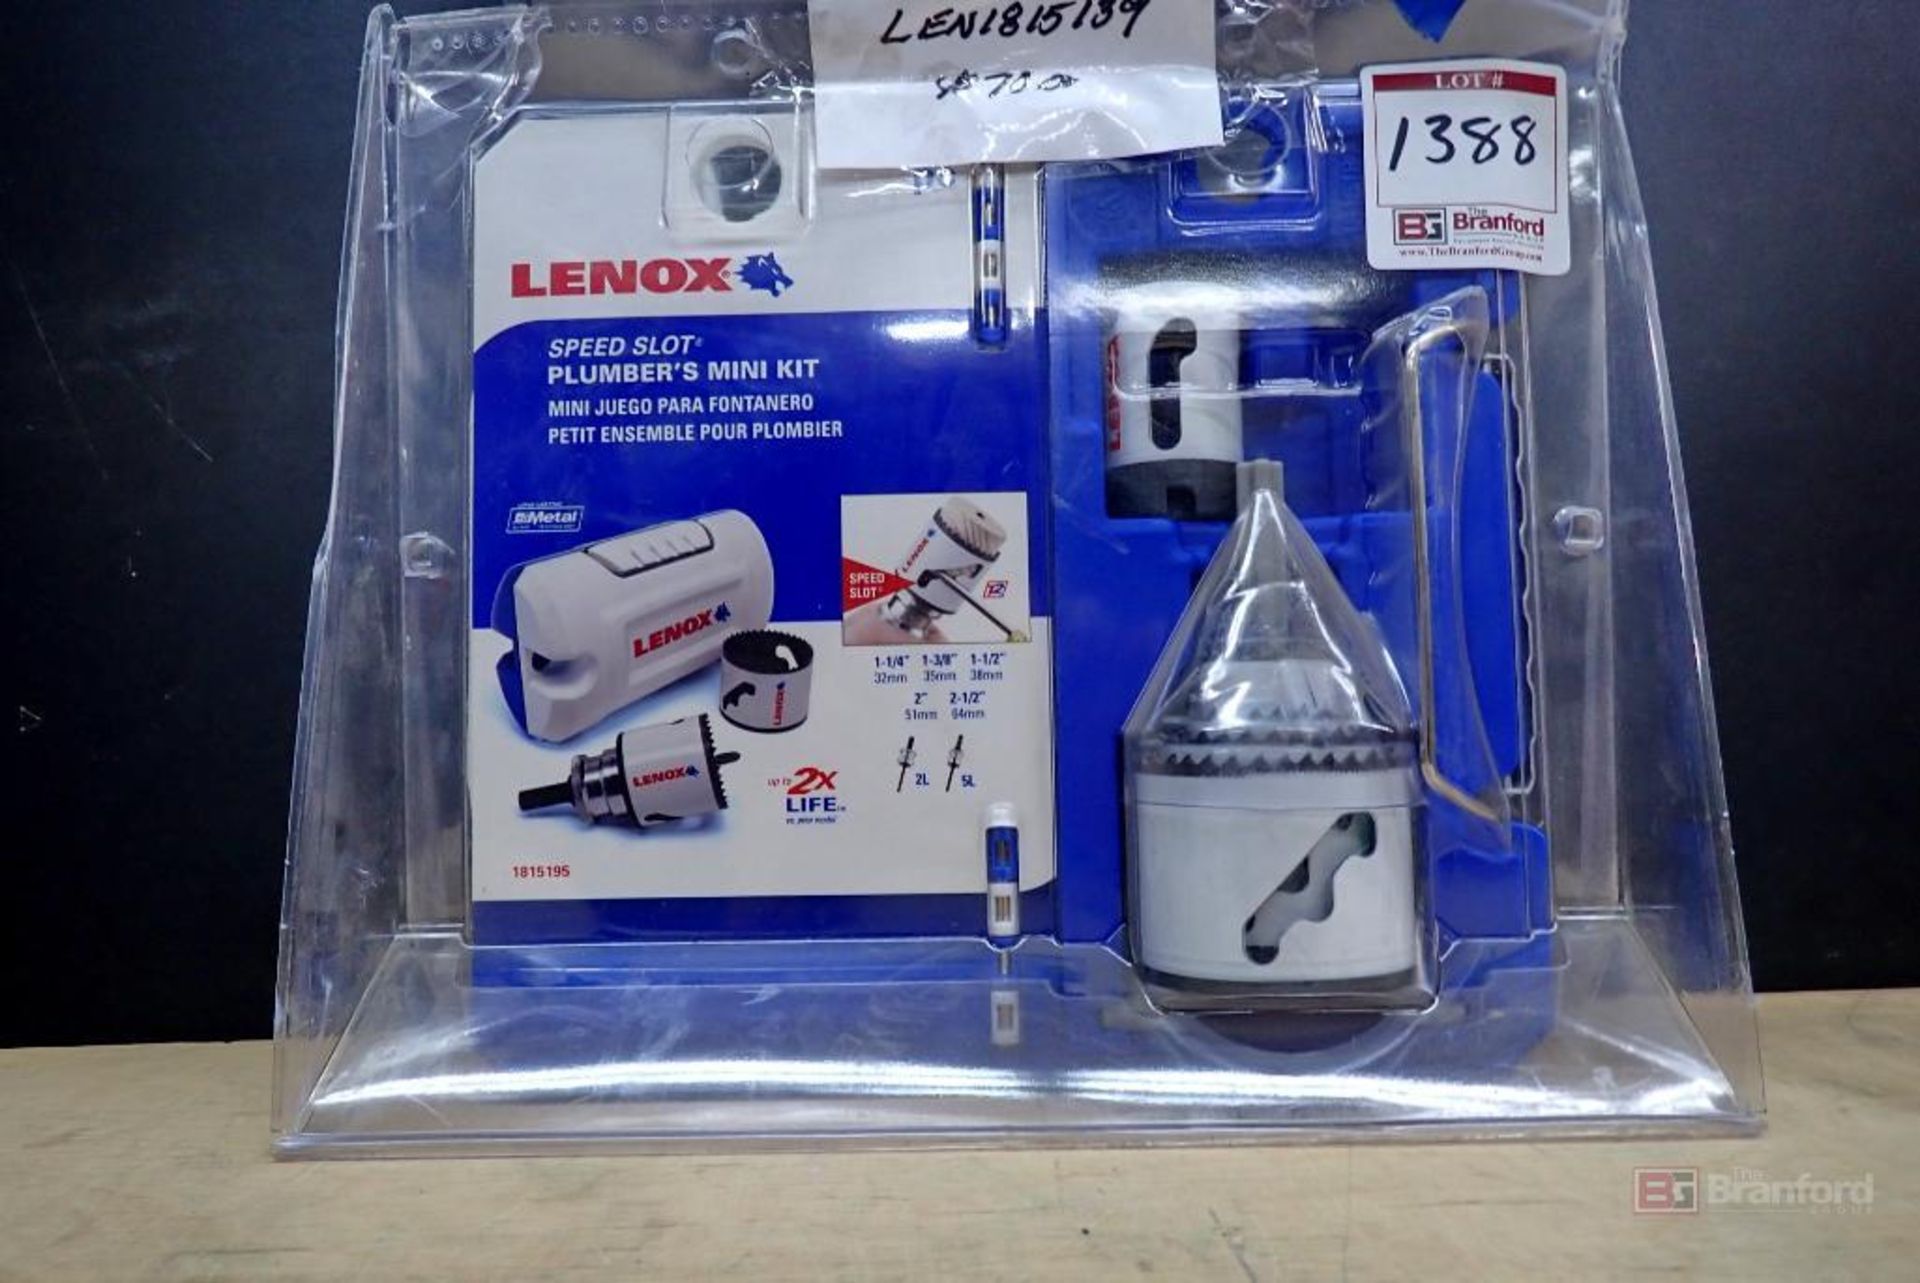 Lenox 1815195 Speed Slot Plumber's Mini Kit - Image 2 of 2